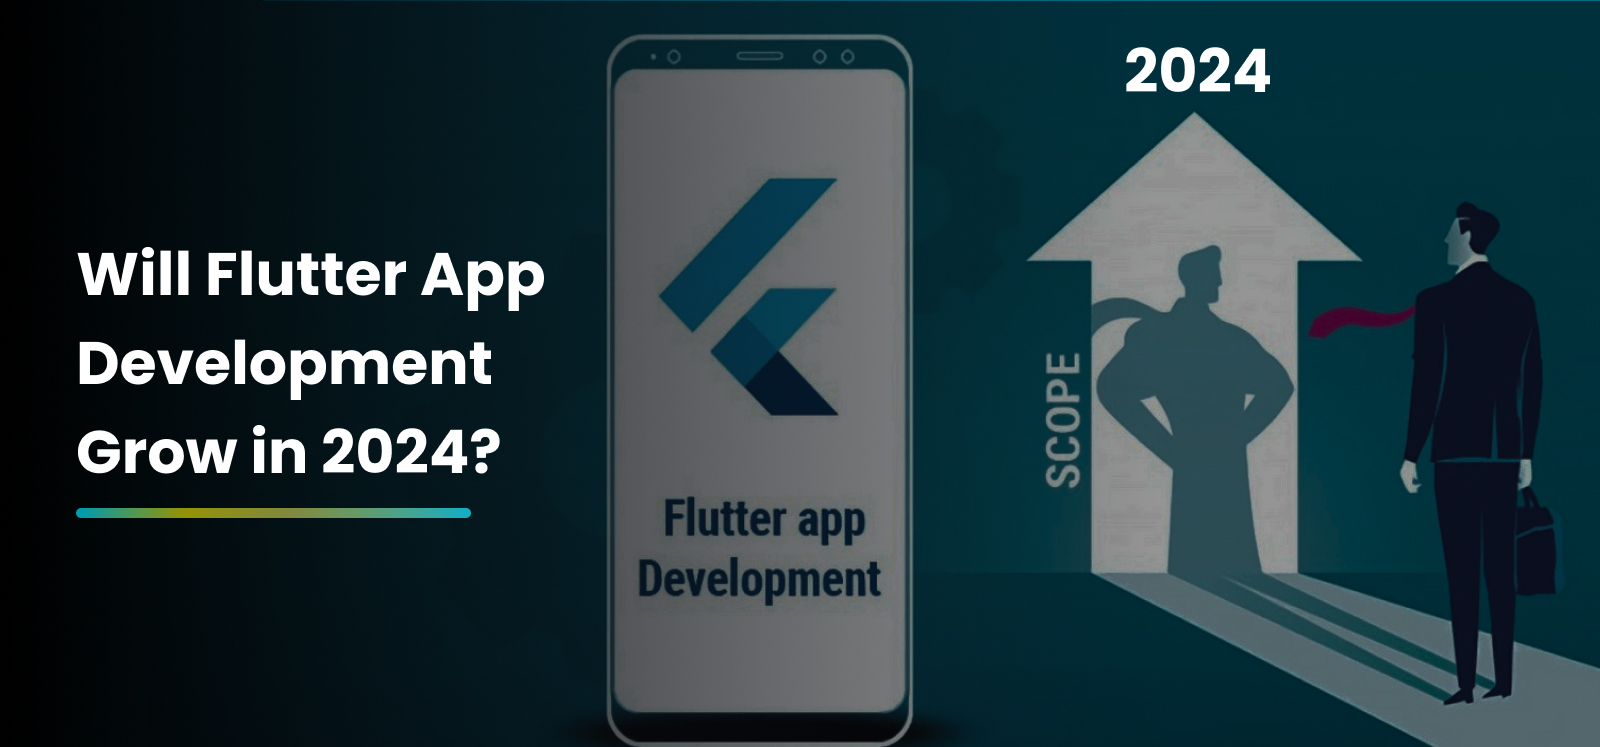 Will Flutter App Development Grow in 2024?